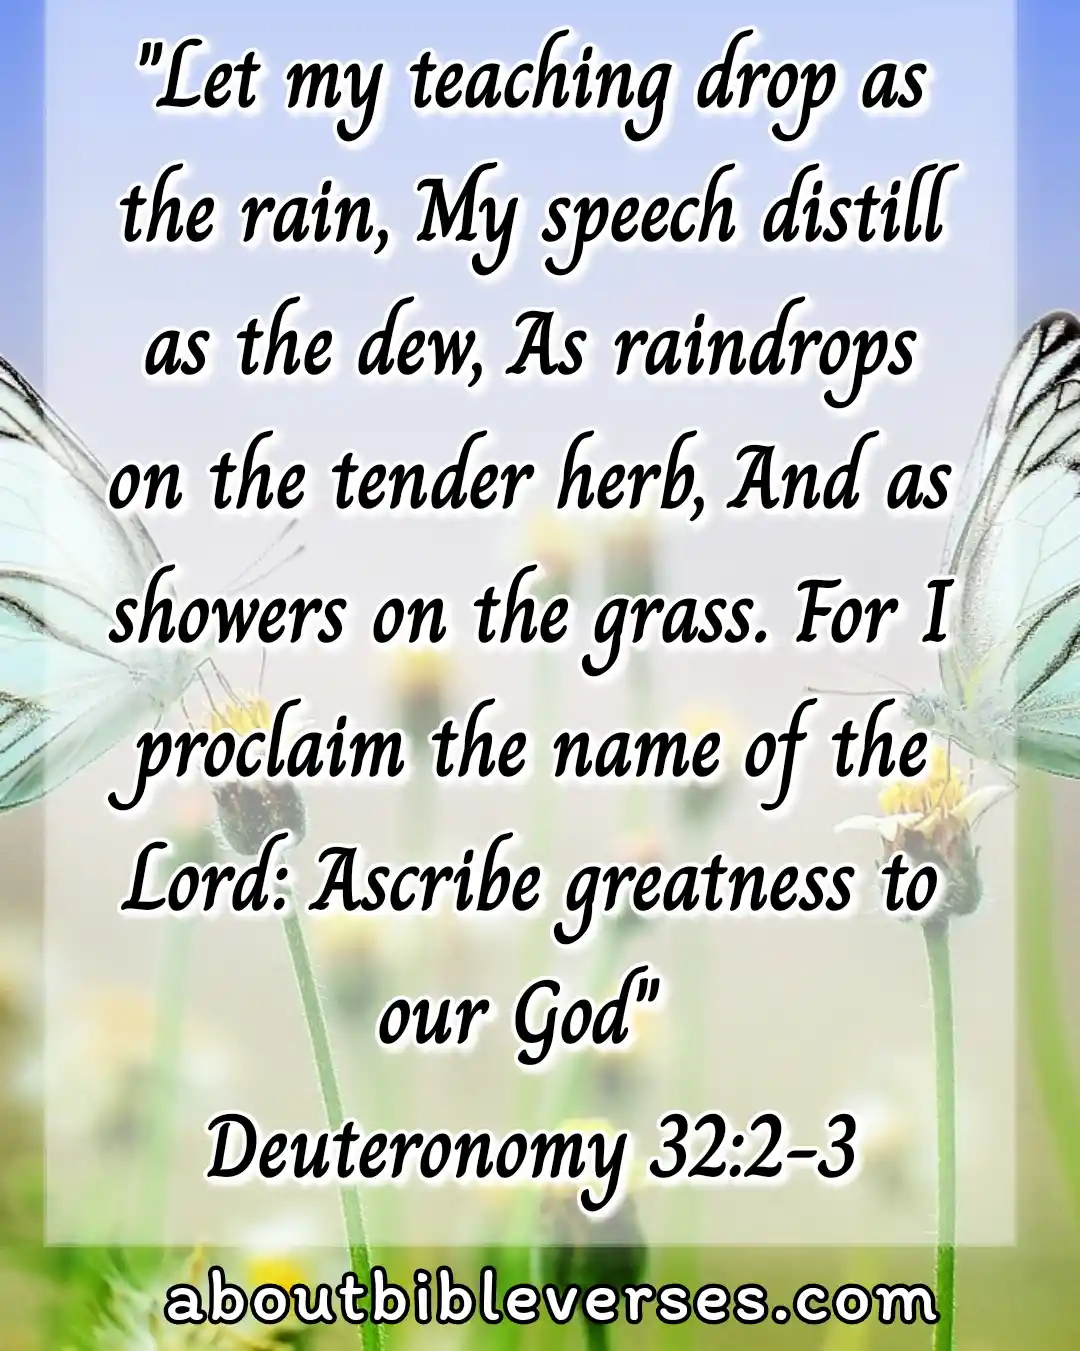 Today bible verses (Deuteronomy 32:2-3)